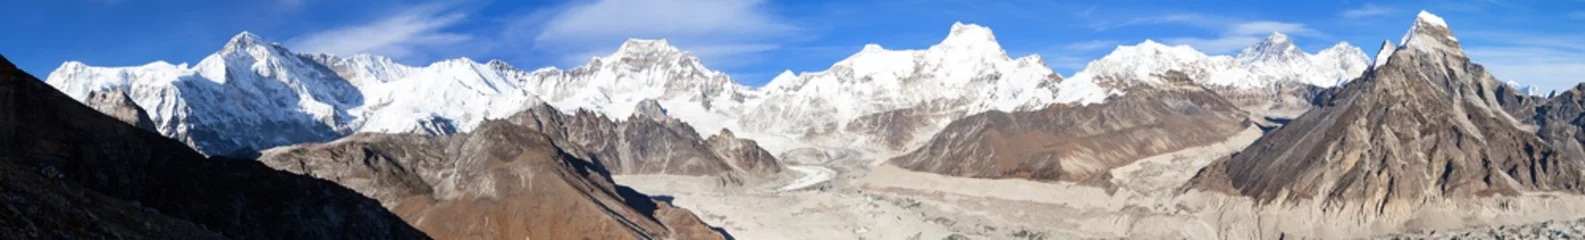 Papier Peint photo autocollant Cho Oyu mount Everest and Lhotse, Nepal Himalayas mountains